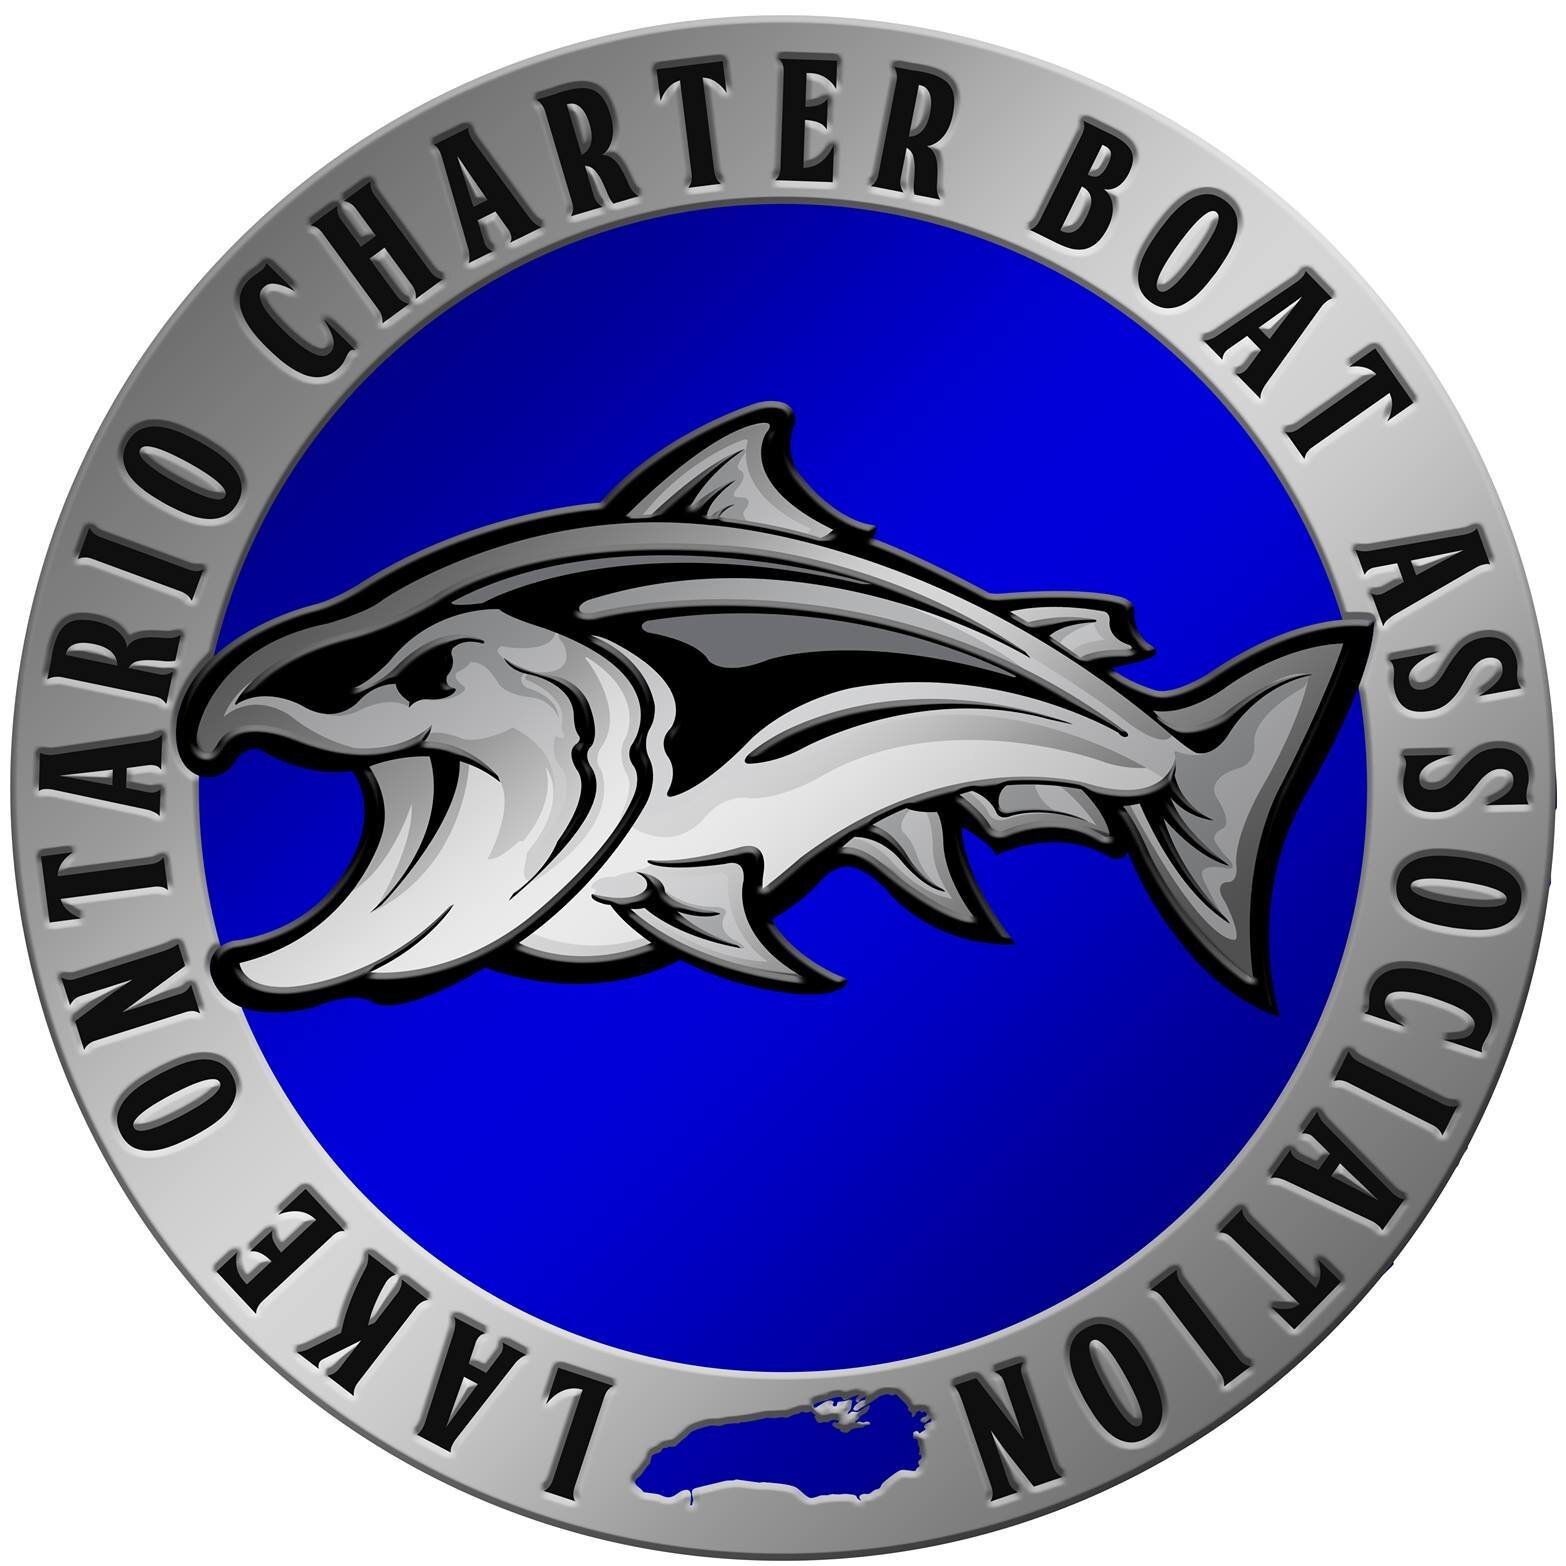 Lake Ontario Charter Boat Association- General Meeting